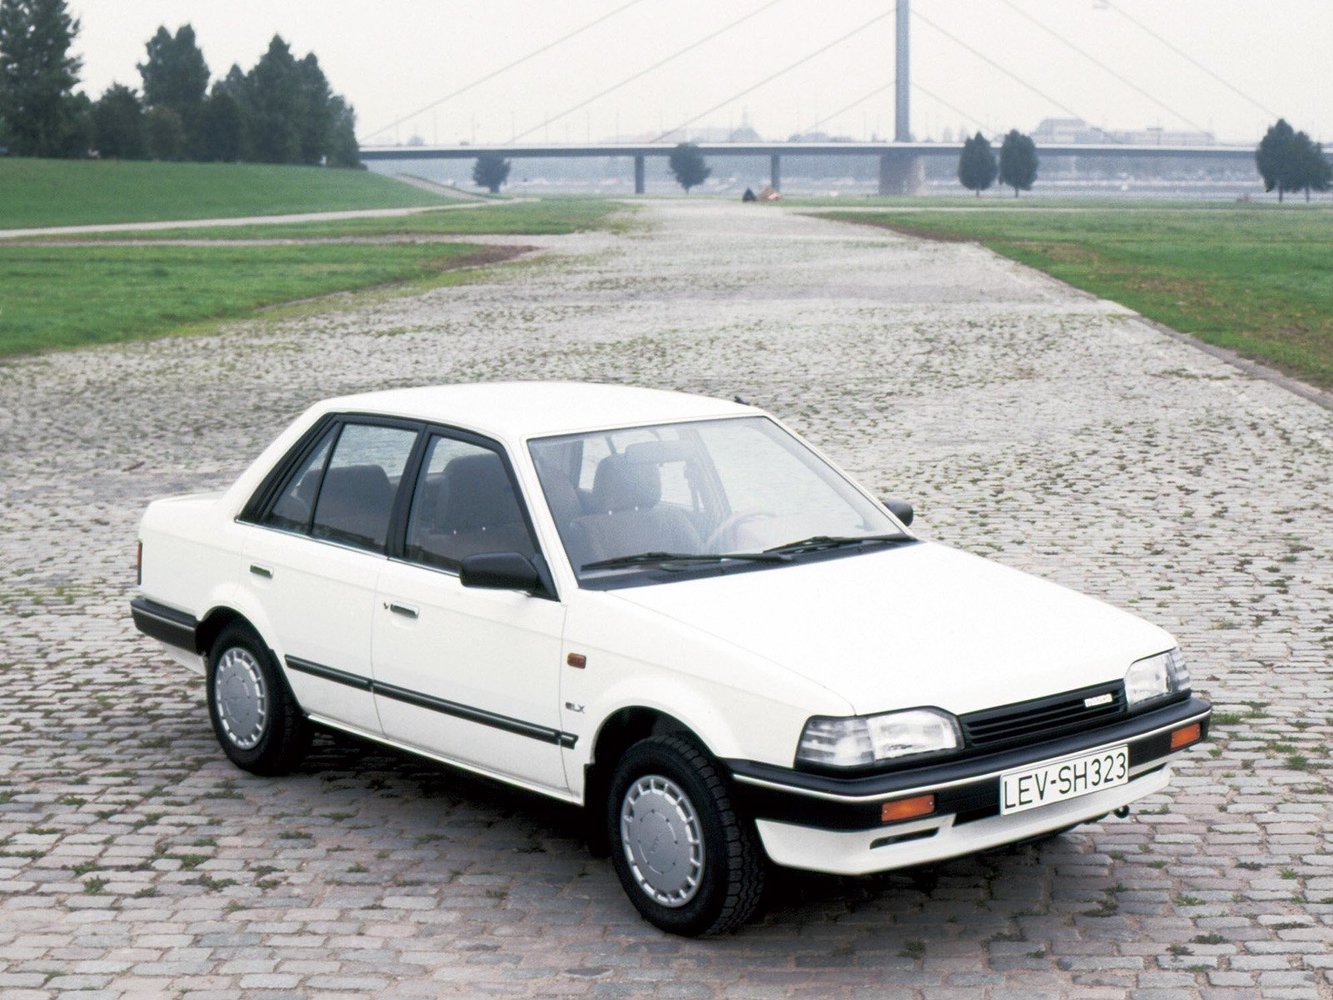 седан Mazda 323 1985 - 1989г выпуска модификация 1.3 AT (60 л.с.)